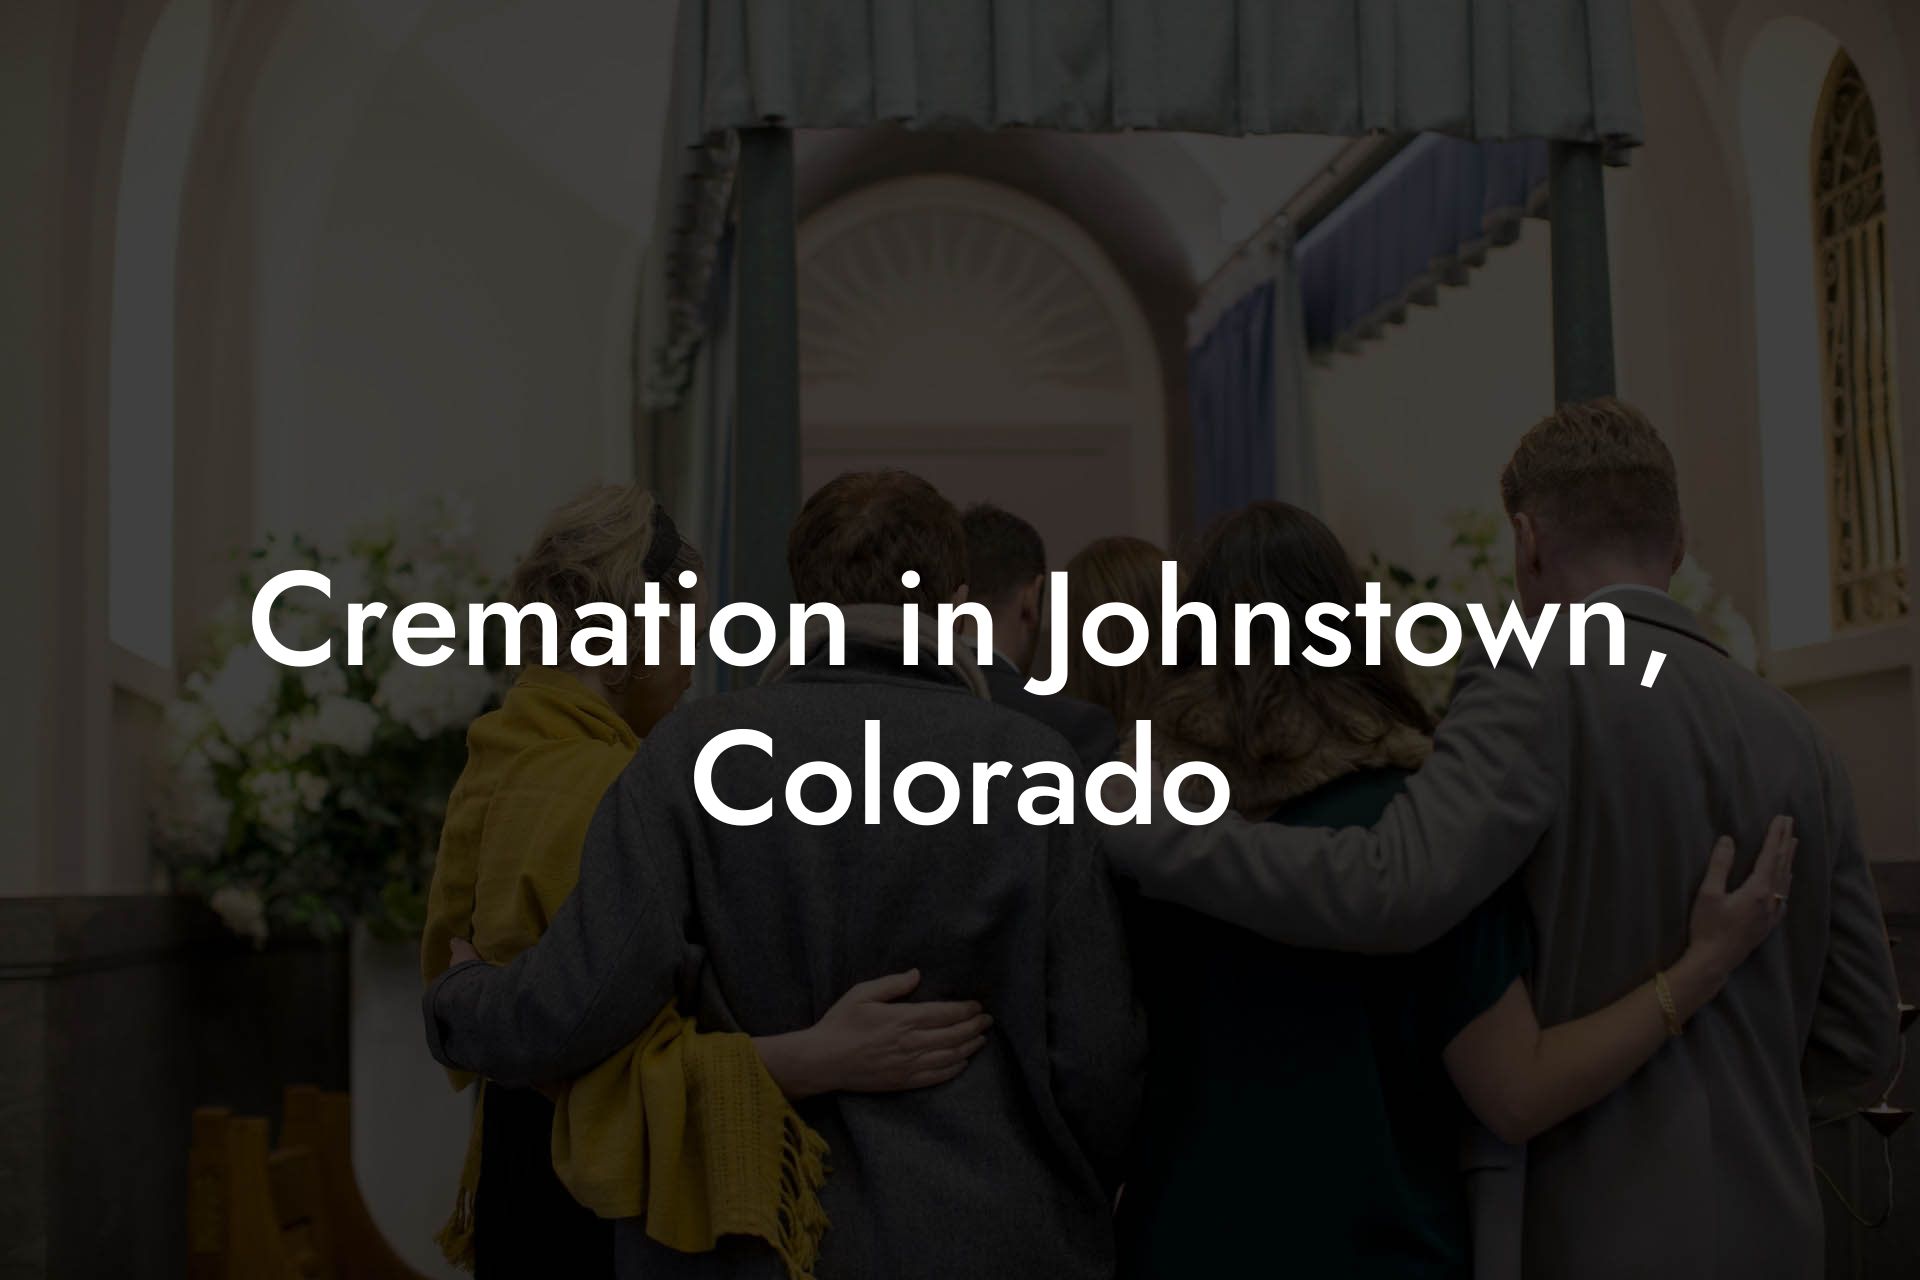 Cremation in Johnstown, Colorado